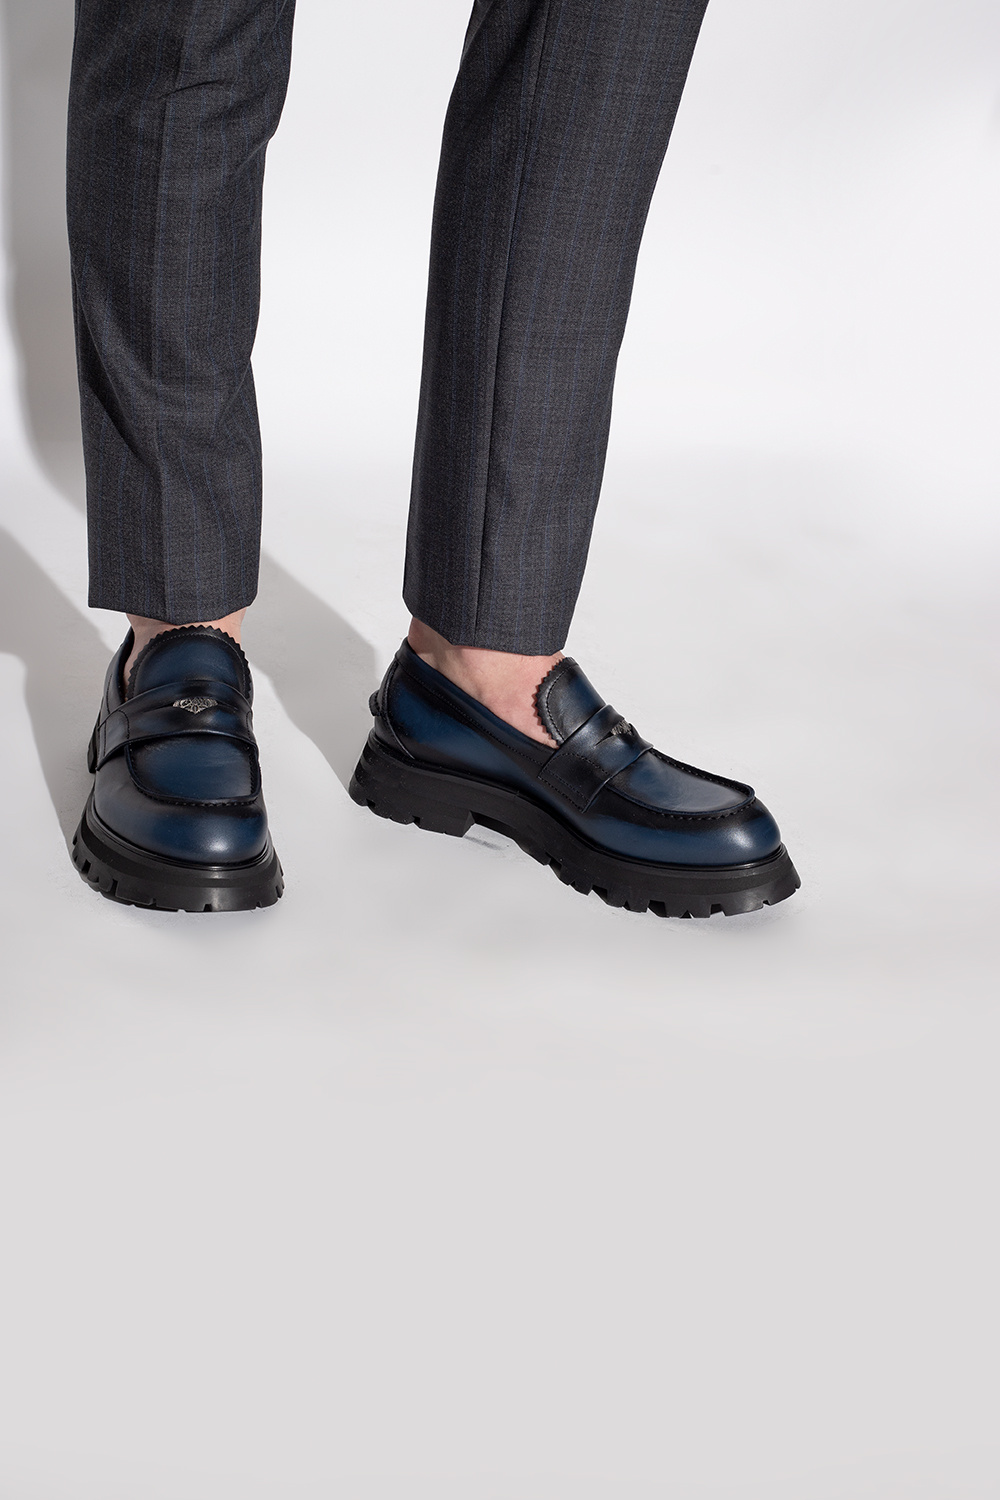 Alexander Leather | Men's Shoes |